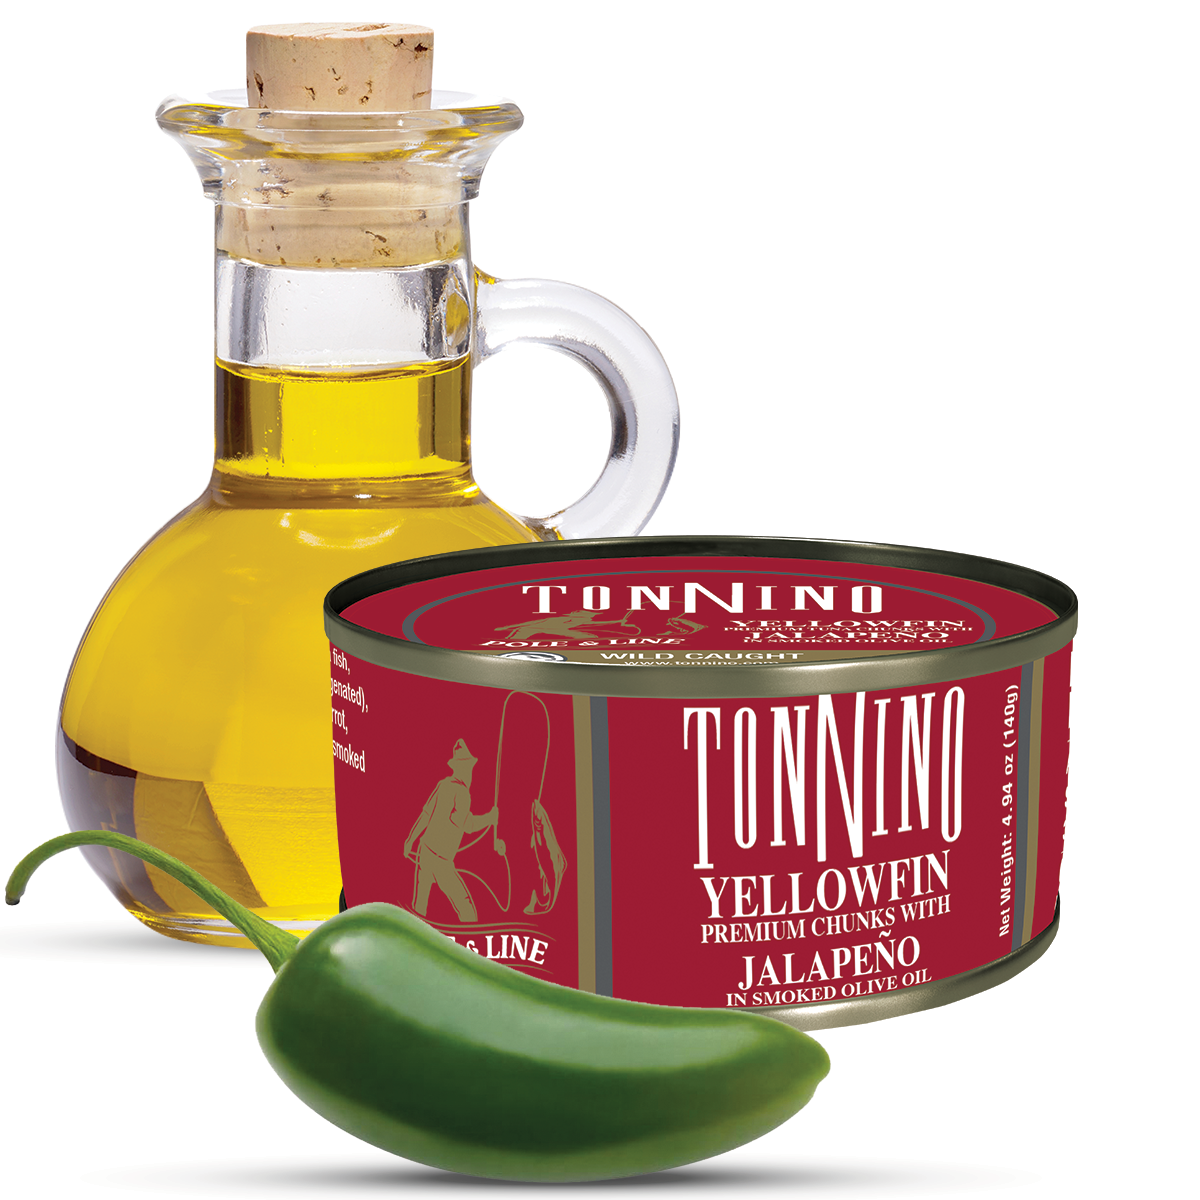 Tonnino Yellowfin Premium Chunks With Jalapeño in Smoked Olive Oil, 4.94 oz